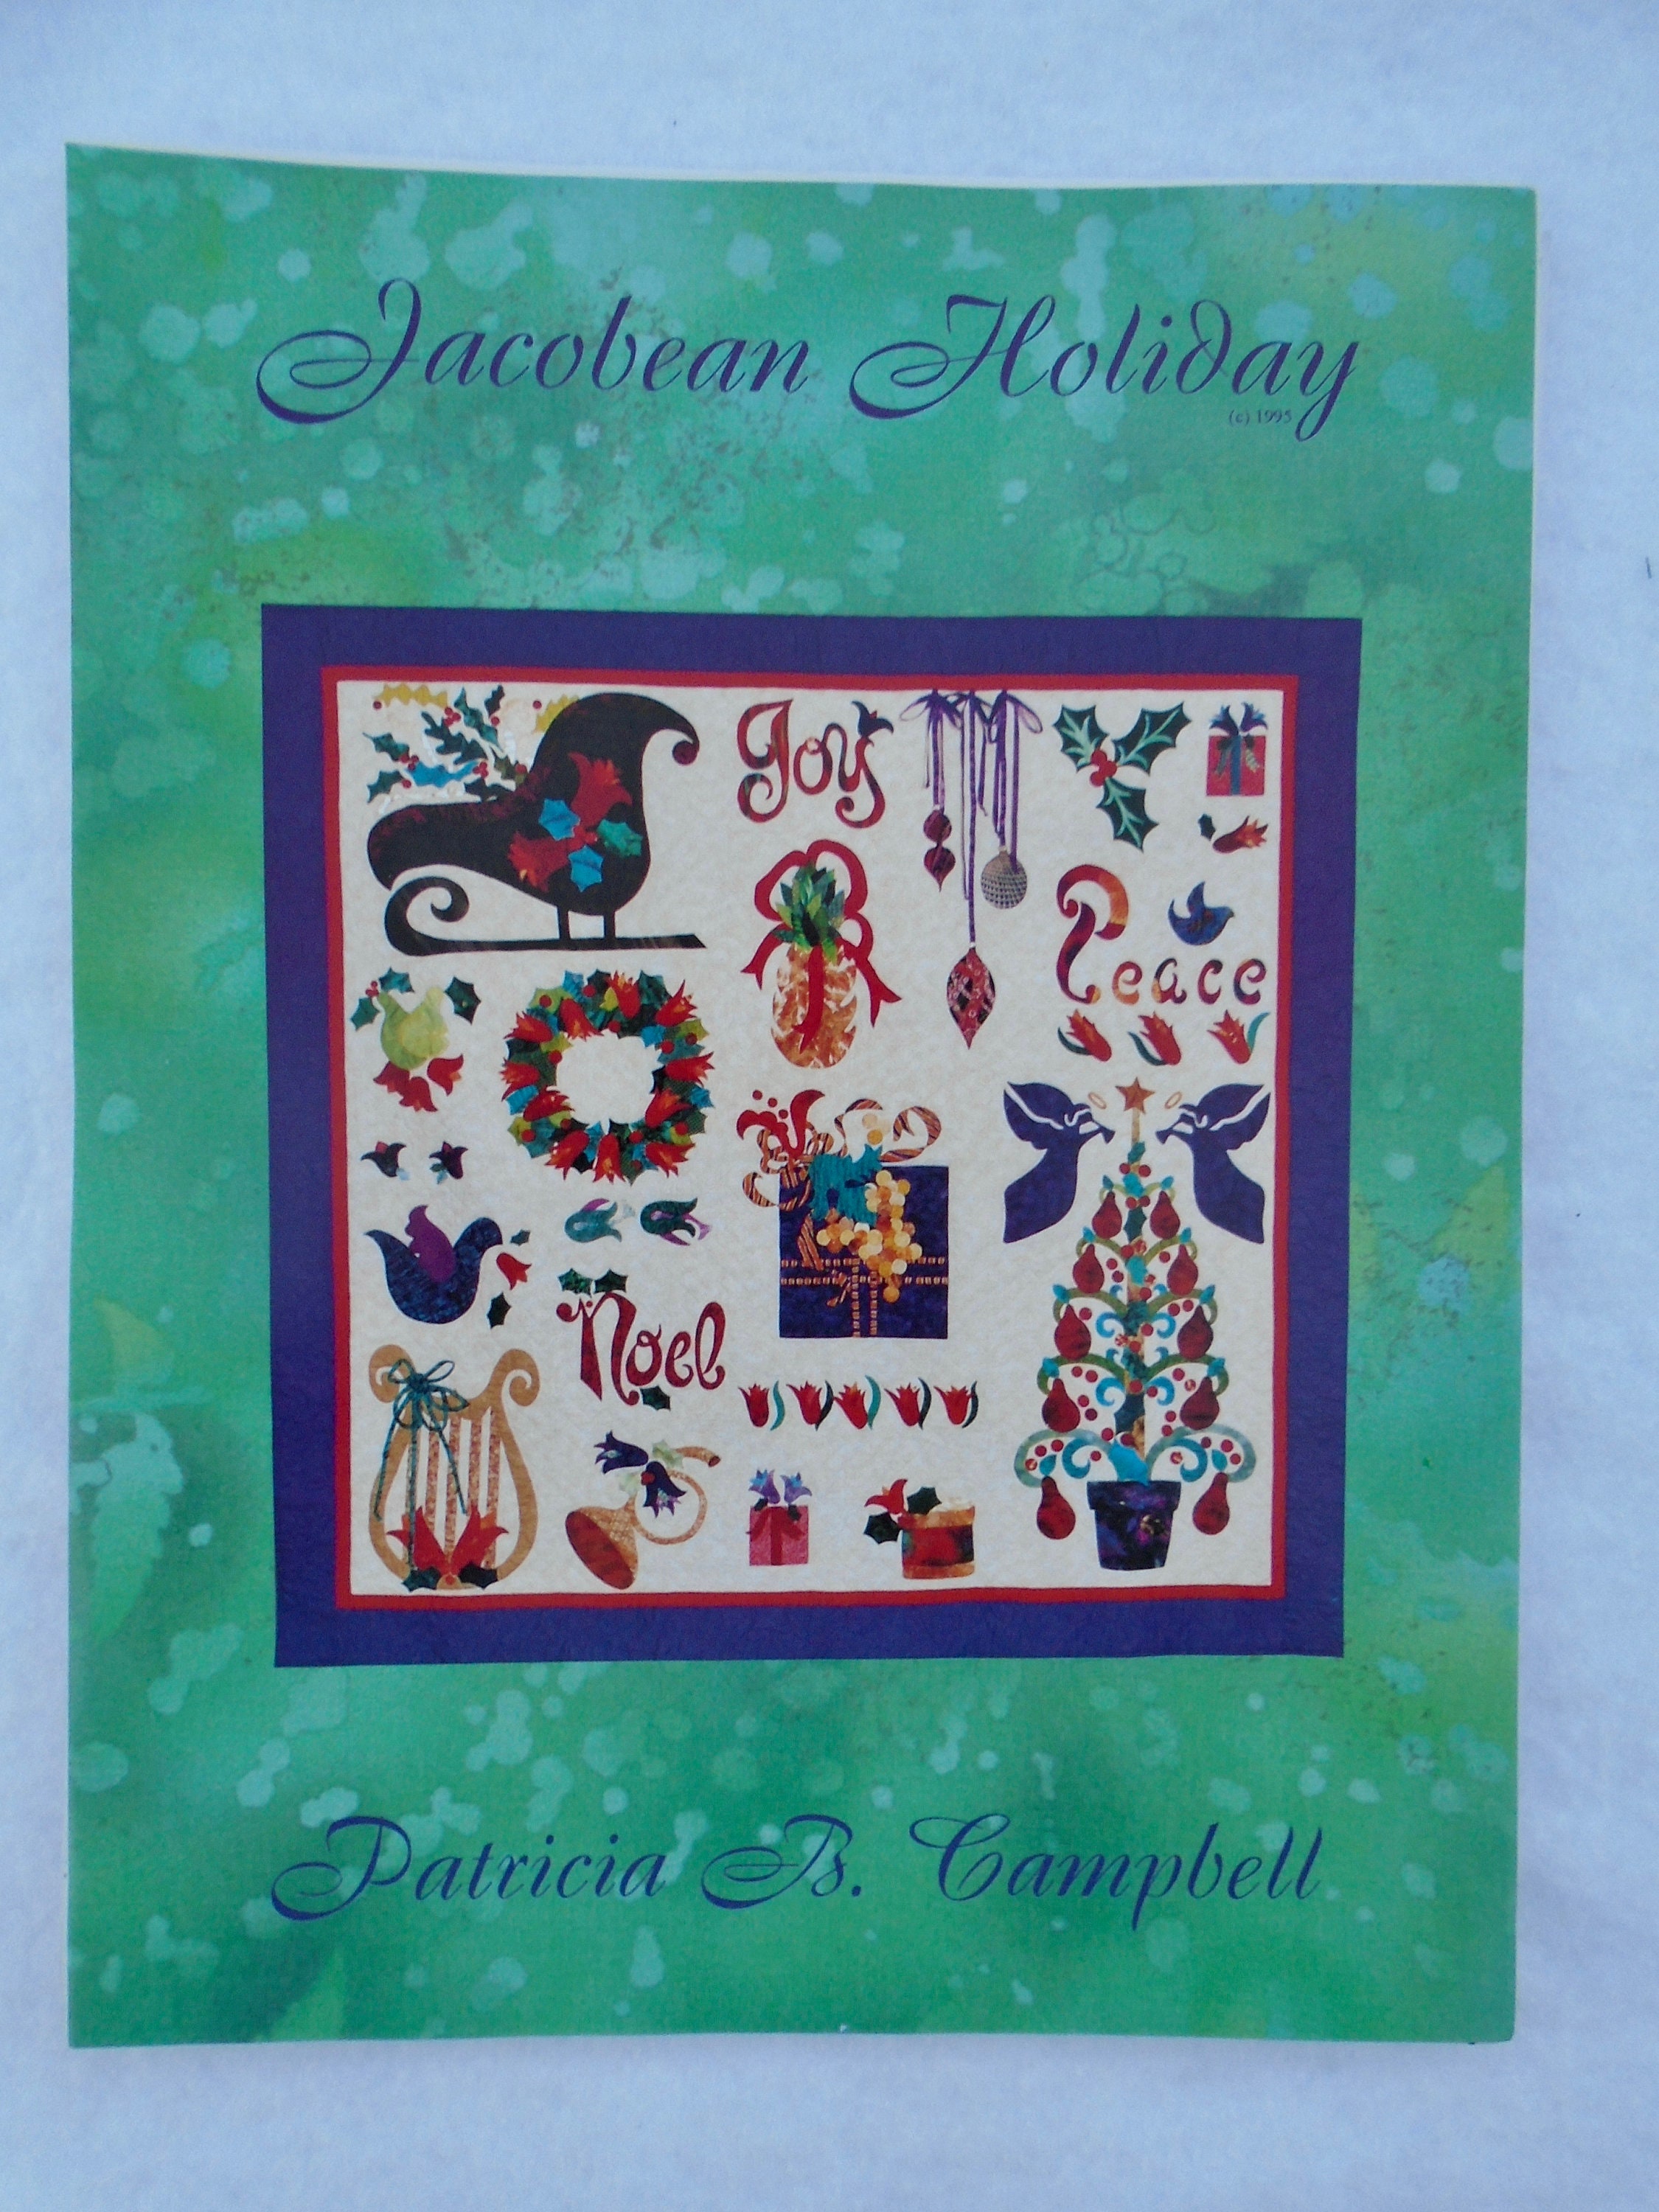 Wool Applique Pattern jacobean Heart Embroidery Pattern Sachet Pin